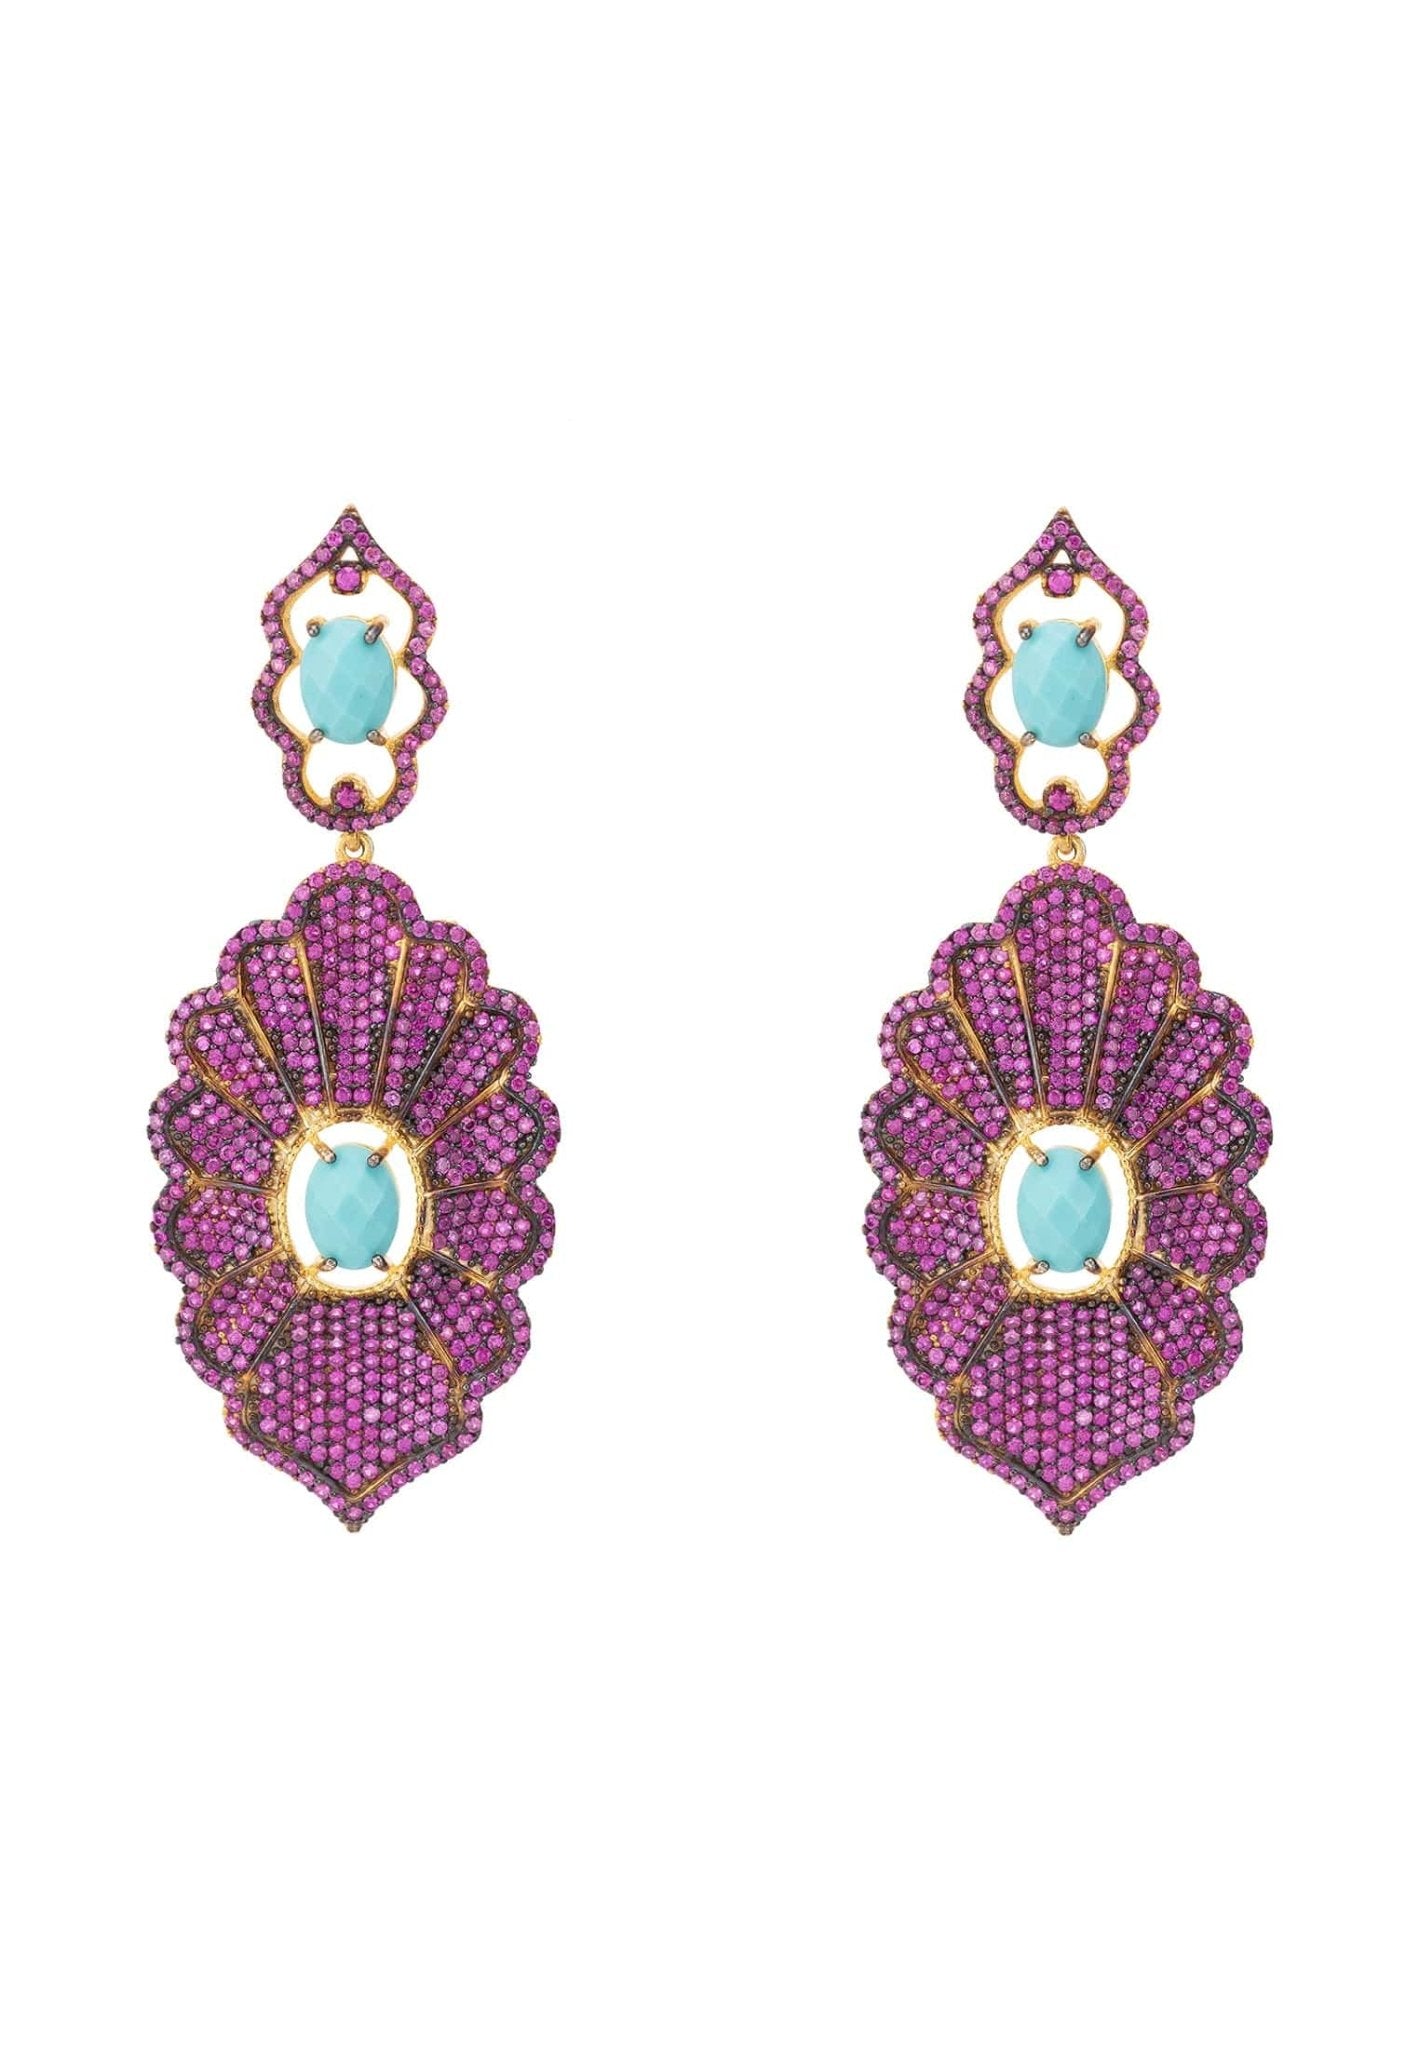 Danbury Earrings Ruby Turquoise - LATELITA Earrings